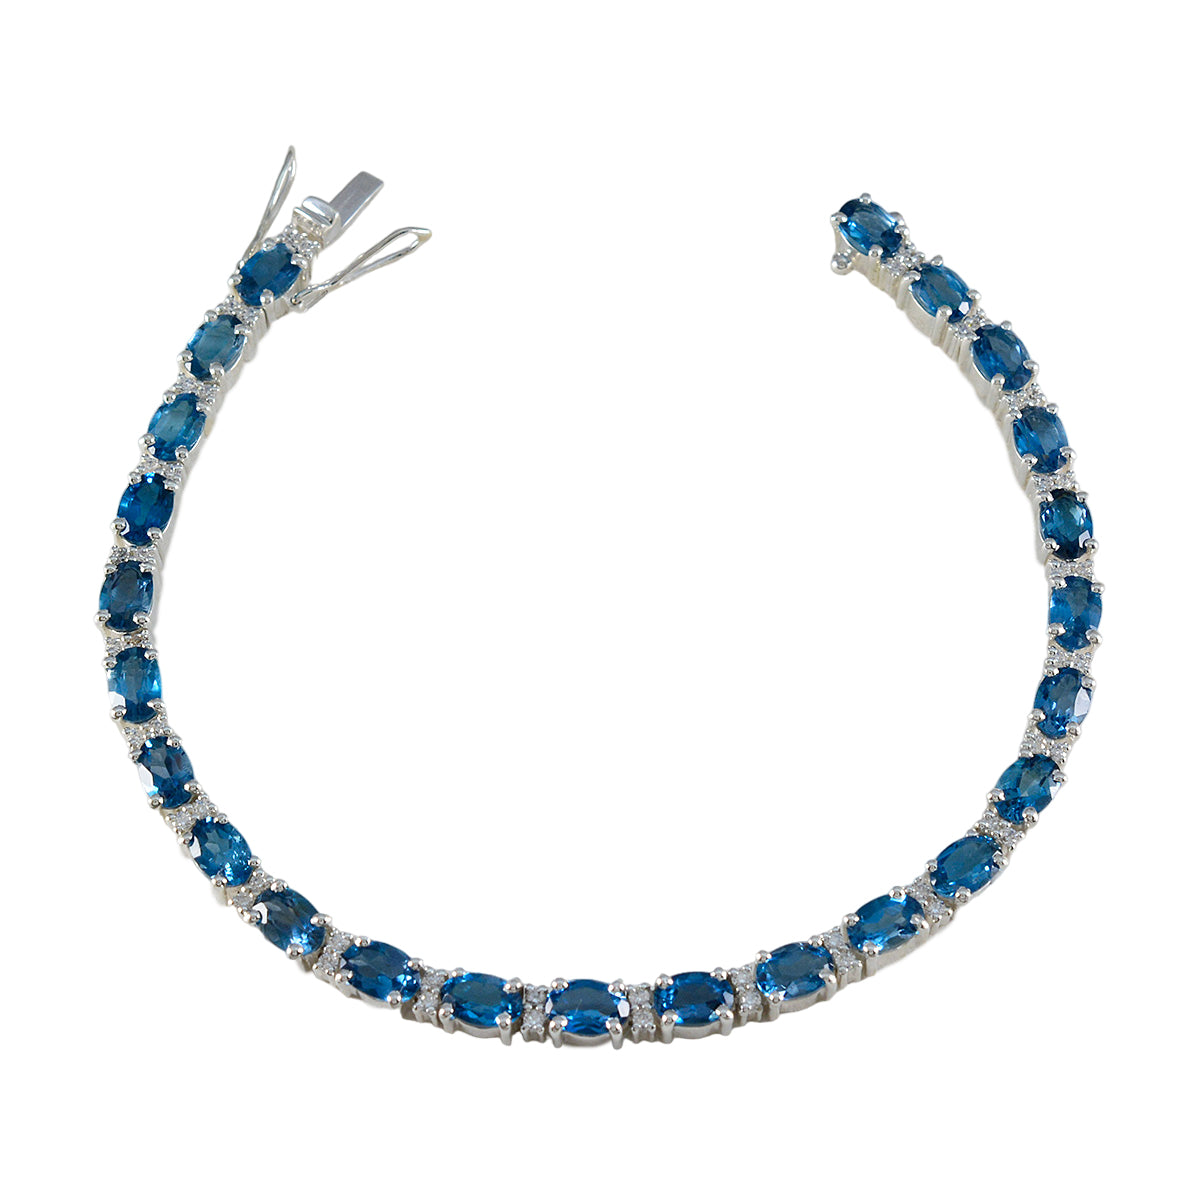 Riyo Attractive 925 Sterling Silver Bracelet For Womens Blue Topaz Bracelet Prong Setting Bracelet with Box With Tongue Tennis Bracelet L Size 6-8.5 Inch.